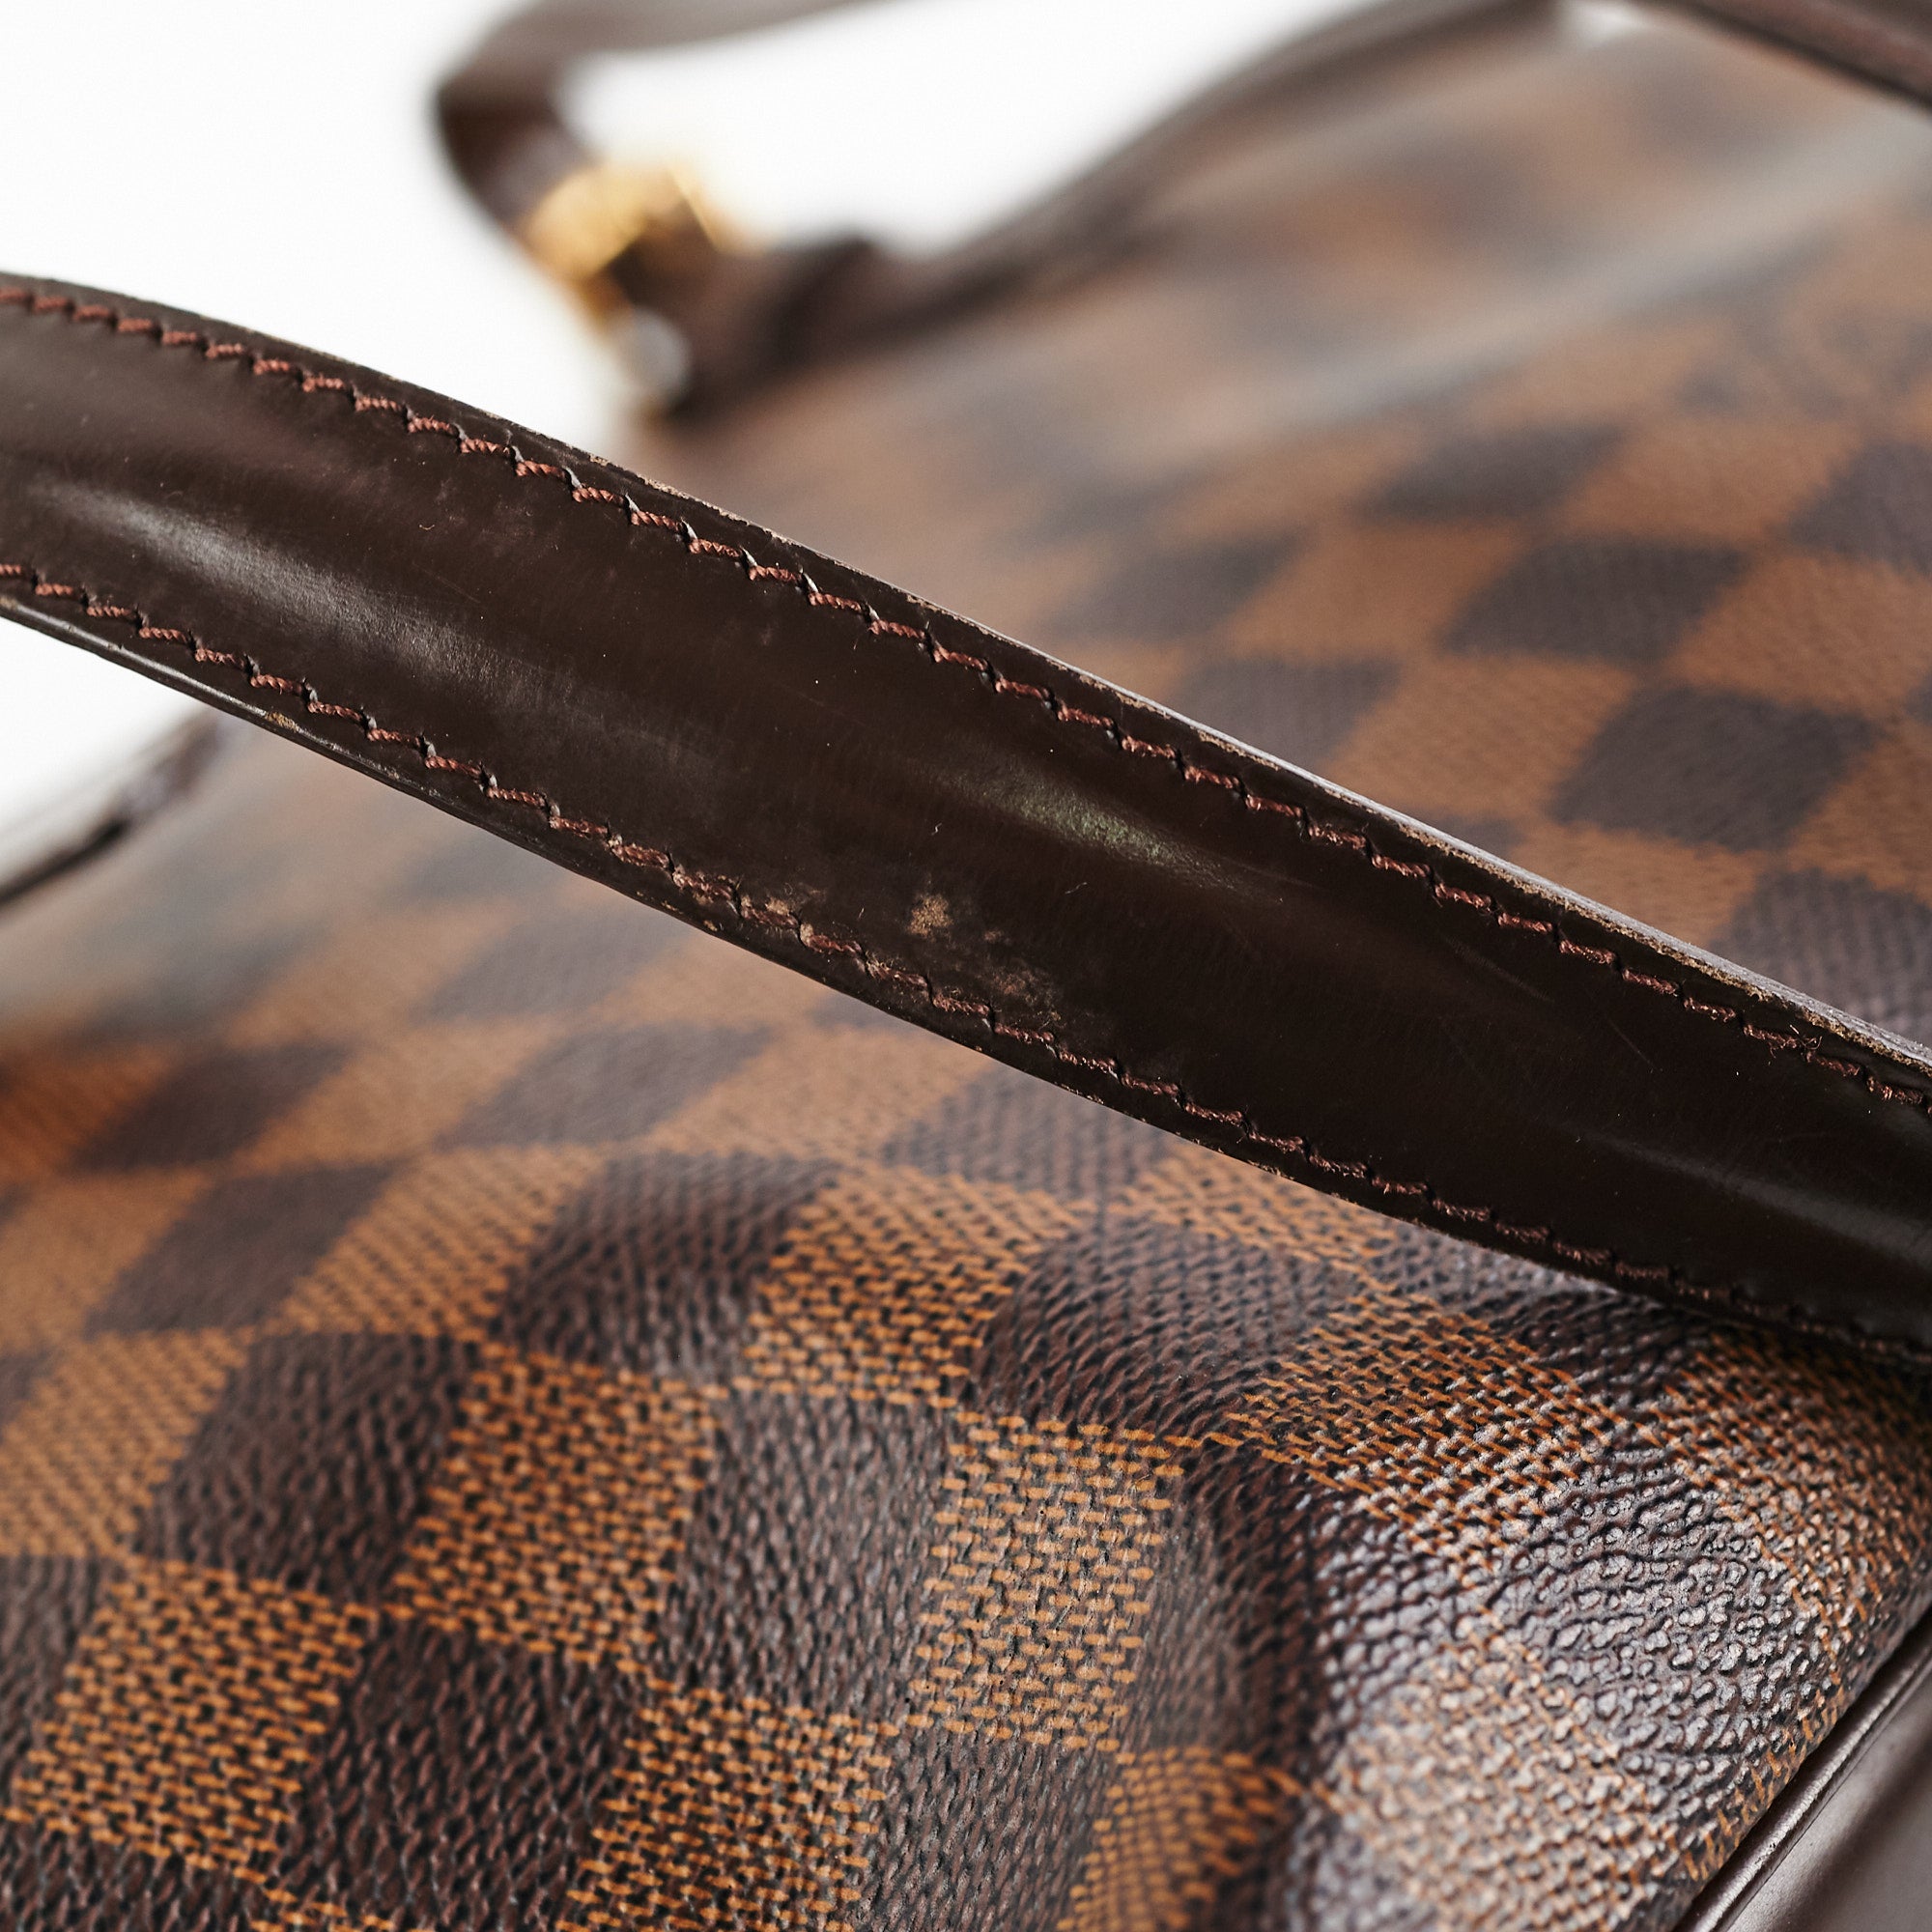 Louis Vuitton Damier Ebene AB Chelsea $1200 Great Bag!! We Have A